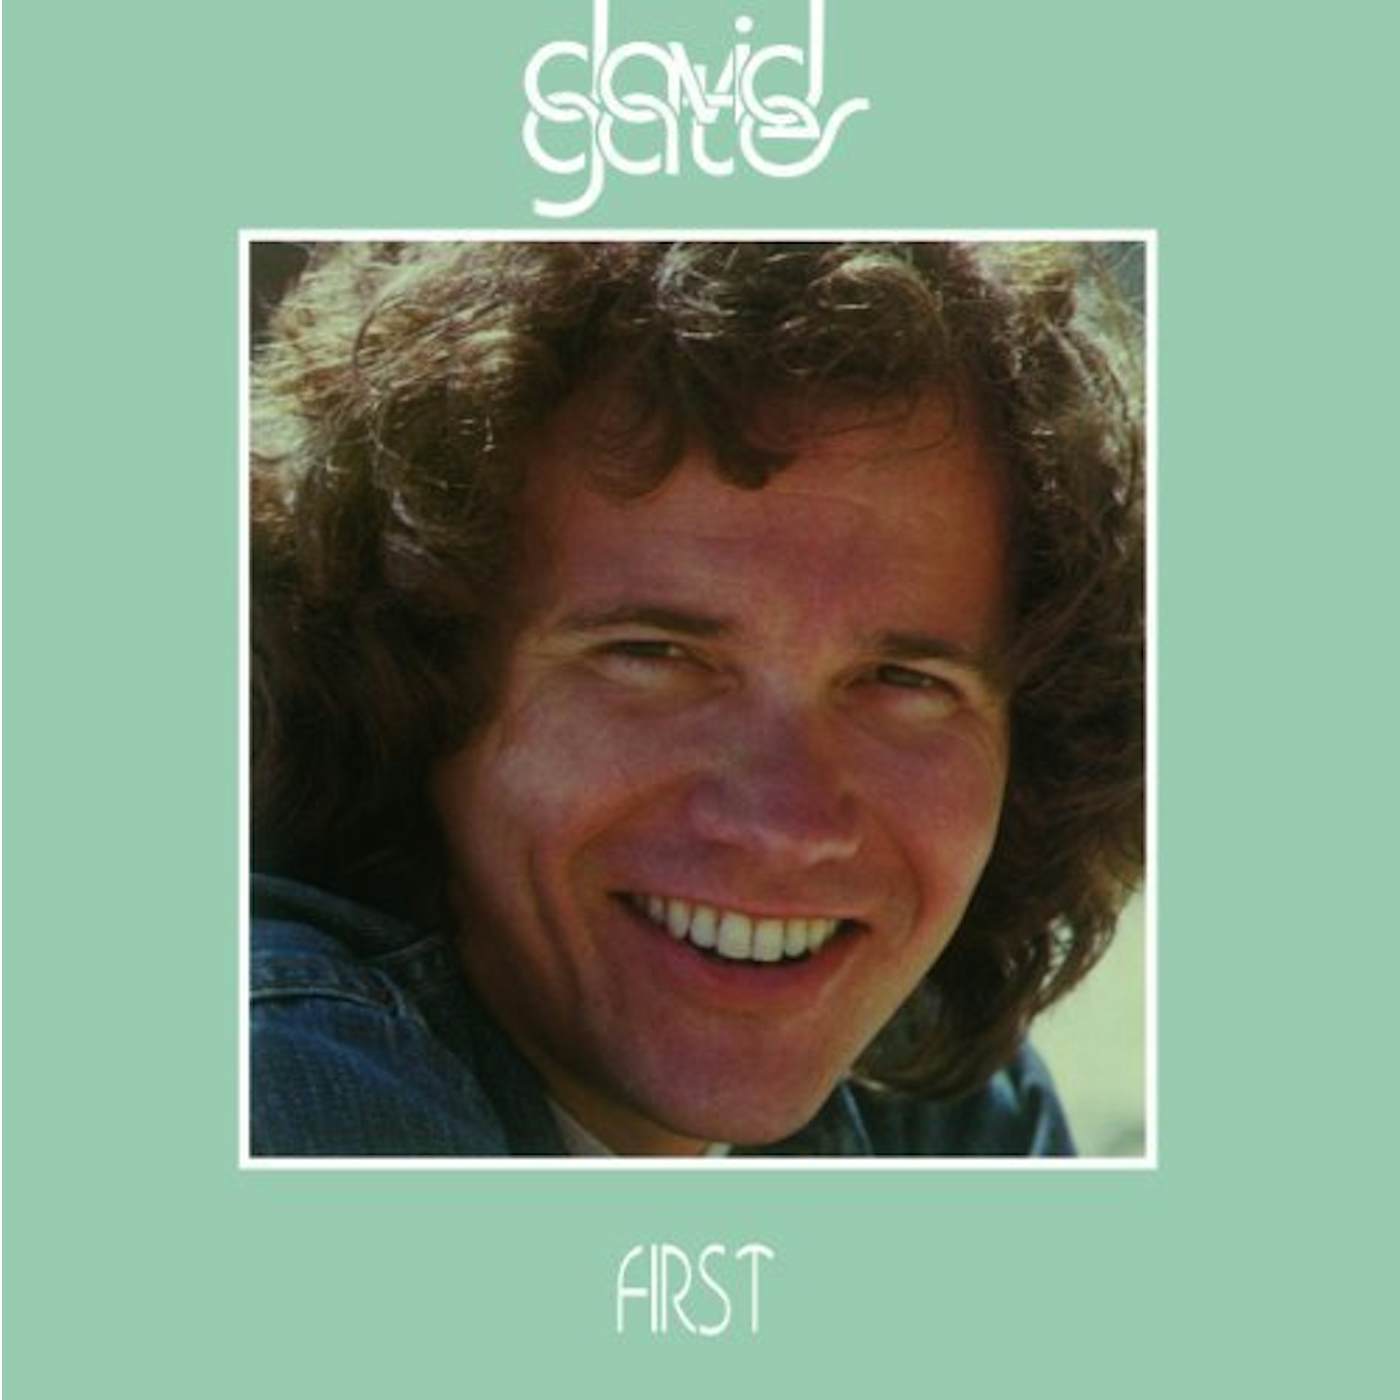 David Gates First Vinyl Record